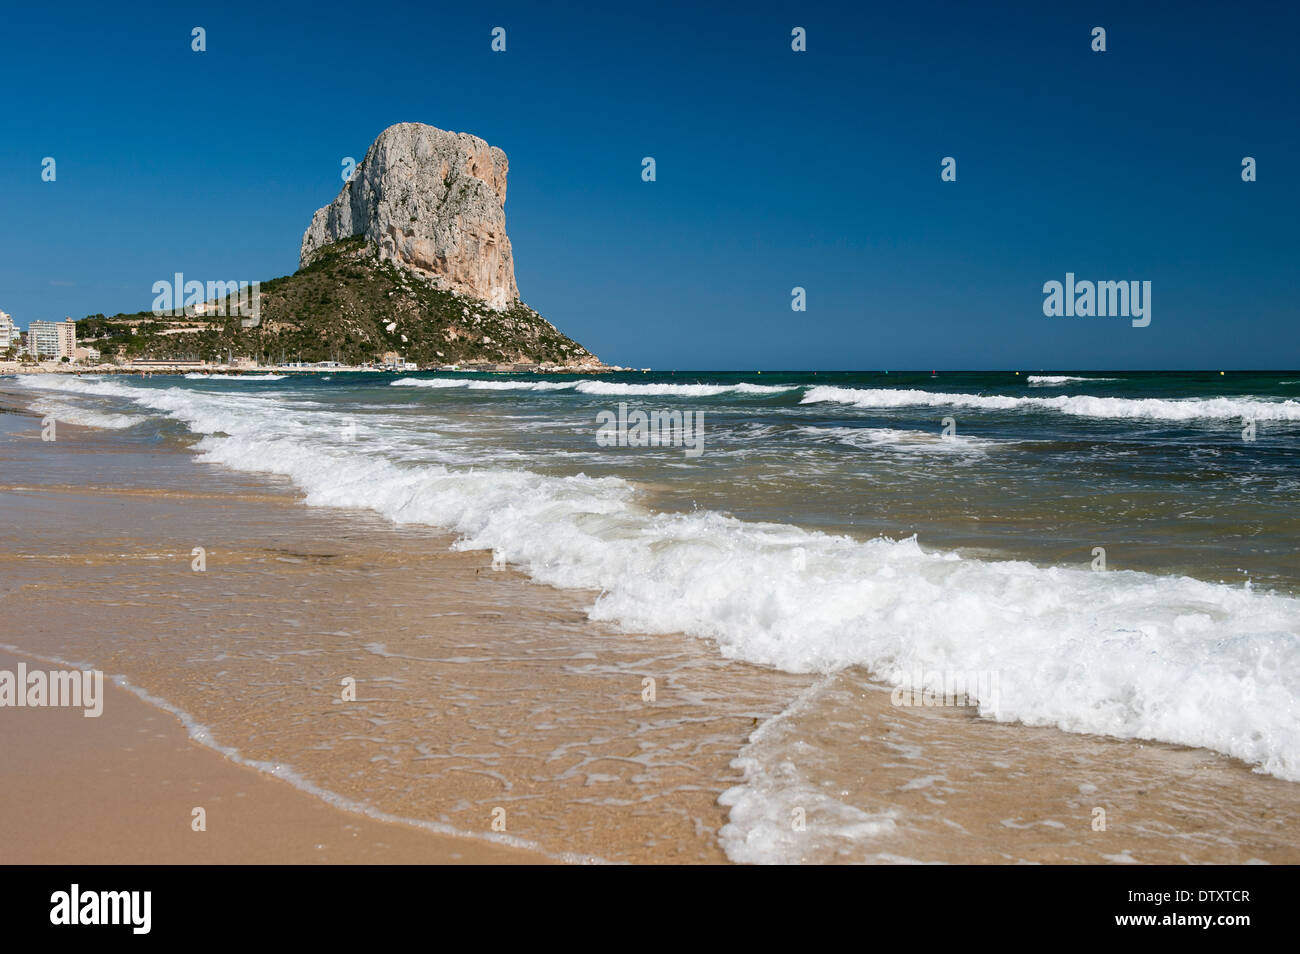 The imposing Penyal d'lfac outcrop in the bay of Calp, Costa Brava, Spain. Stock Photo